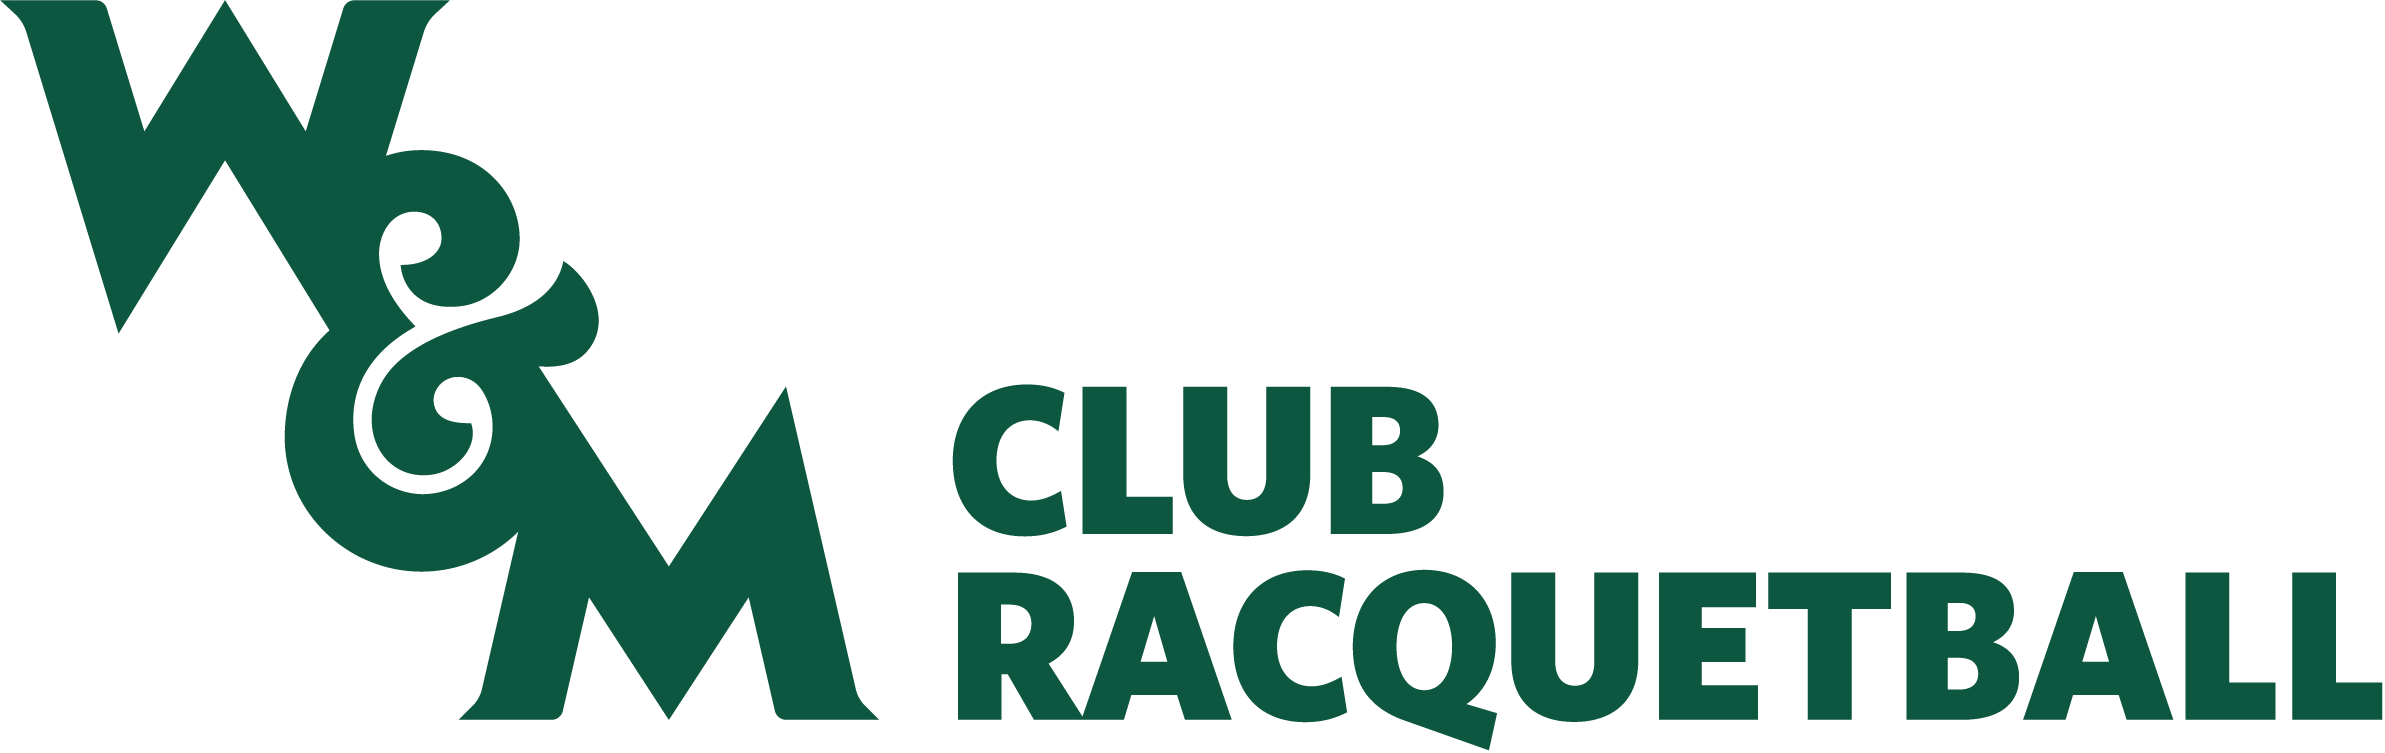 Club Racquetball Webpage